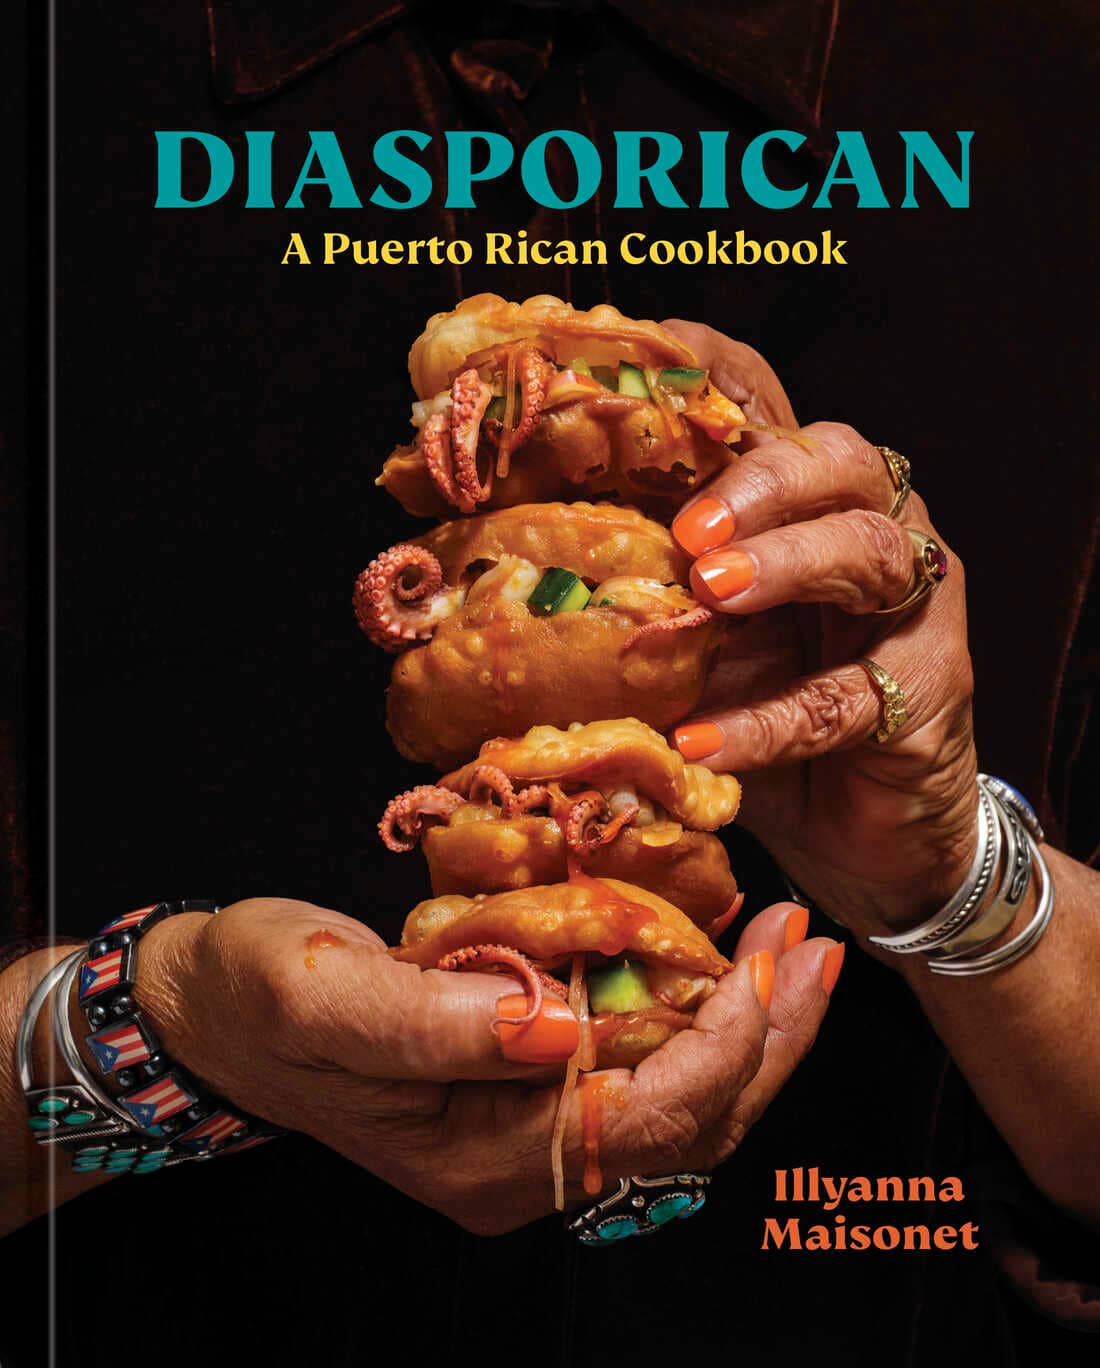 Illyanna Maisonet&#8217;s new cookbook reflects the diversity of the Puerto Rican diaspora